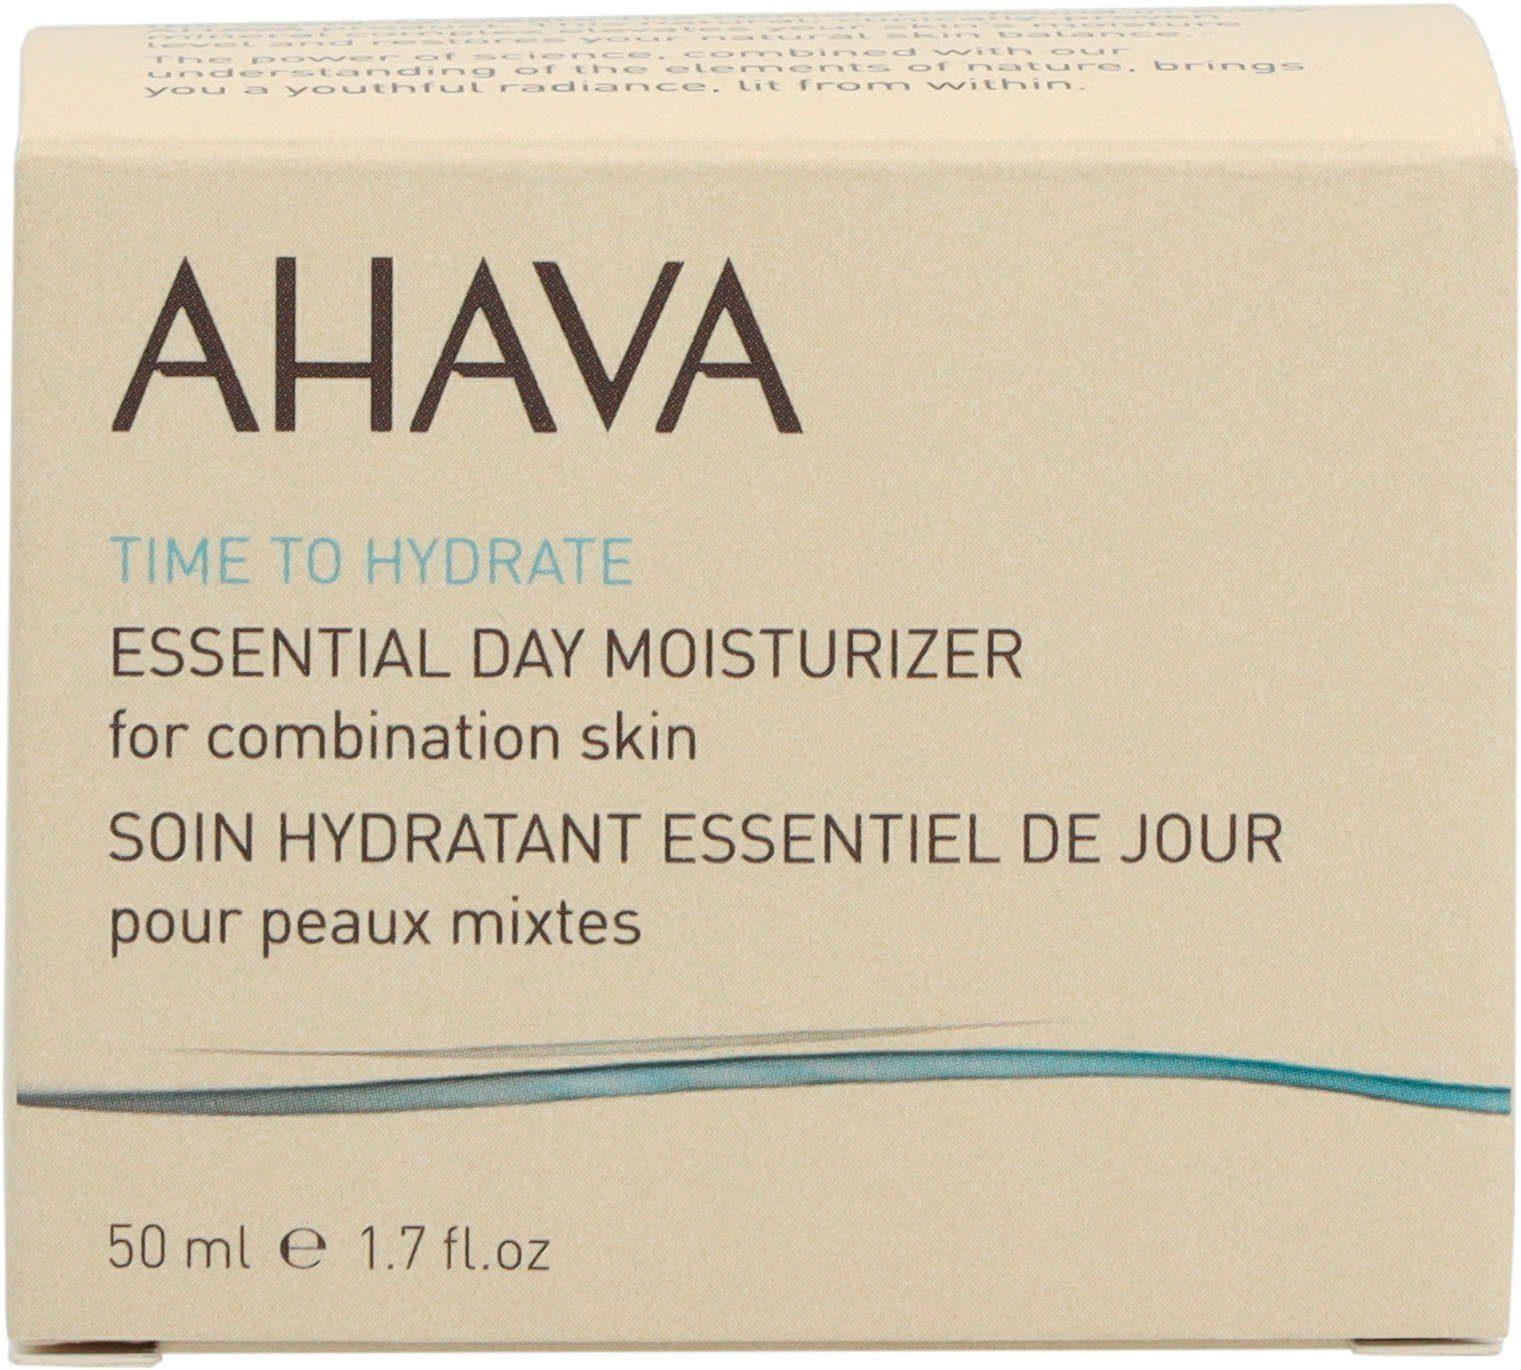 Essential Gesichtspflege Combination Hydrate Moisturizer AHAVA Time To Day